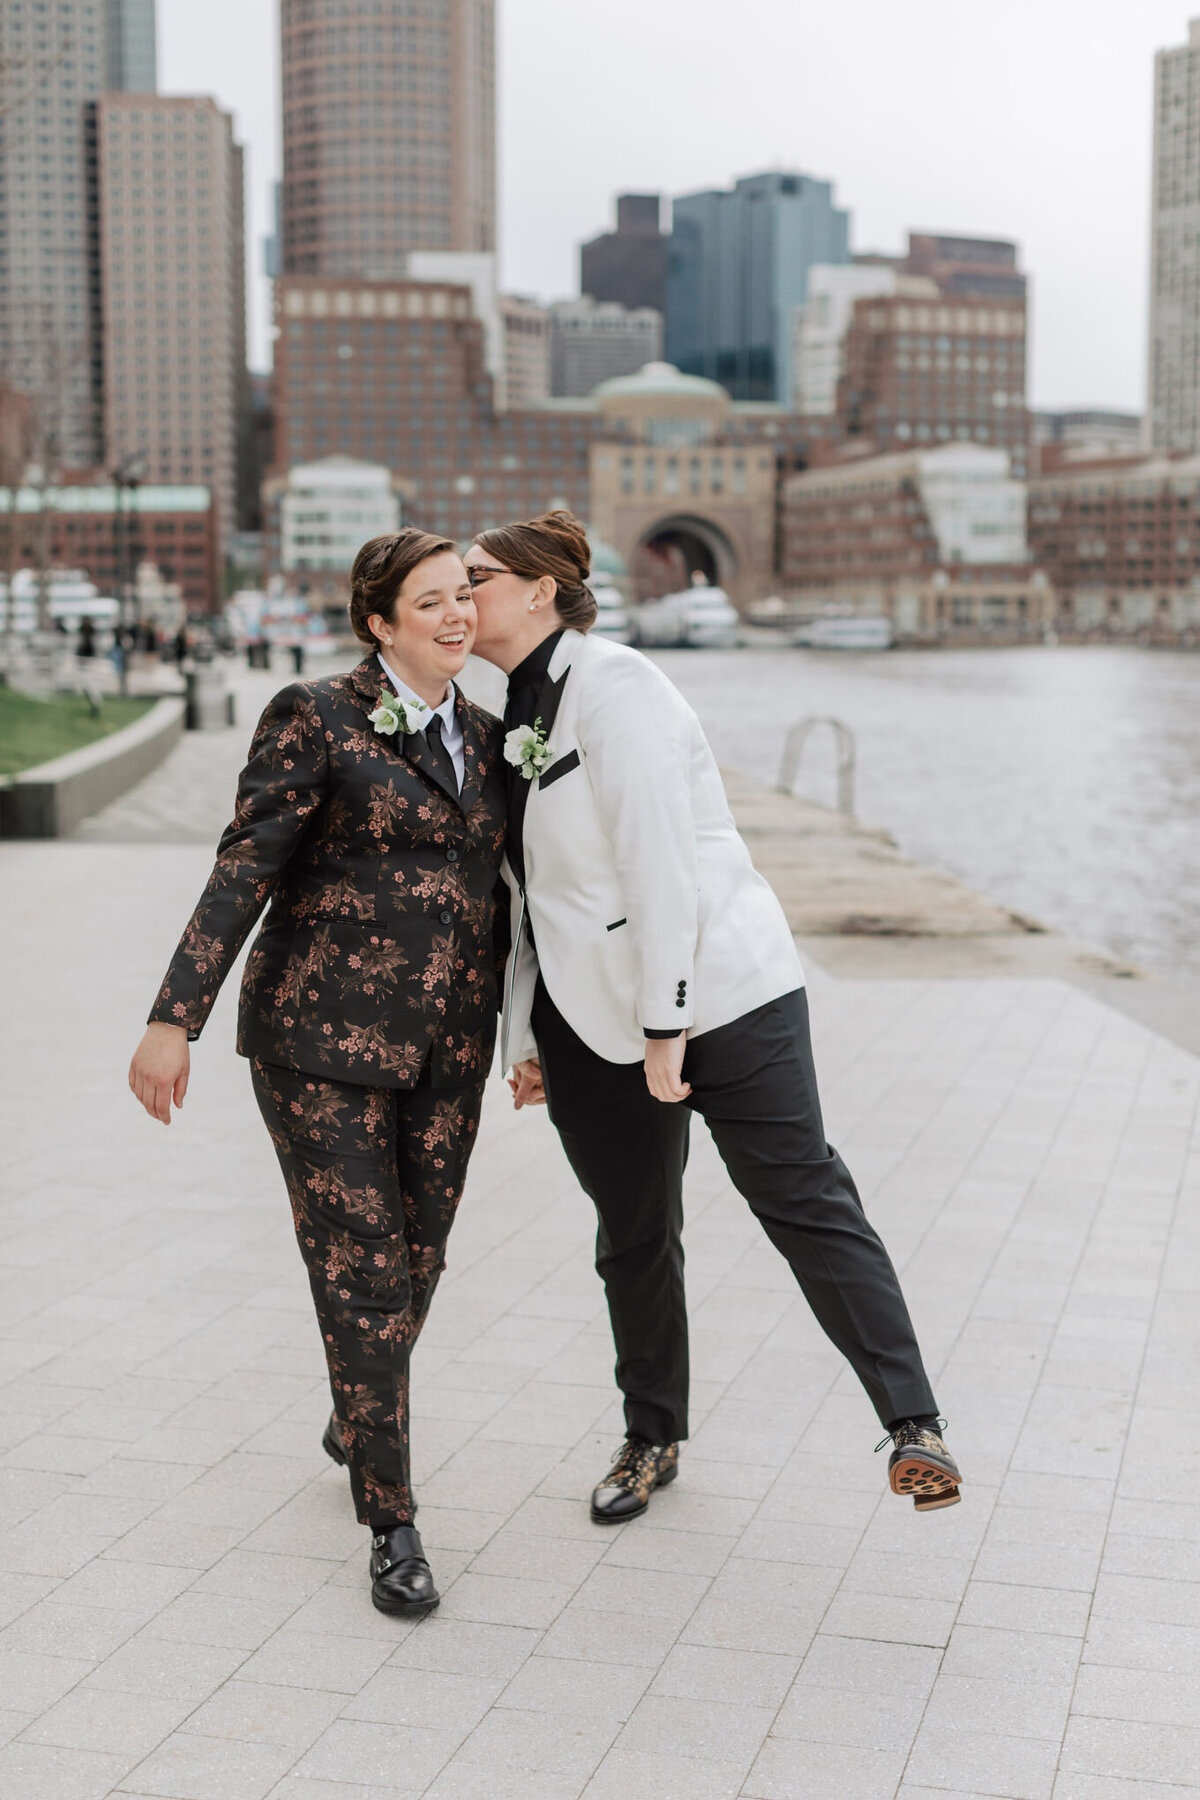 Lena Mirisola Photography Boston Massachusetts East Coast New England Wedding Engagement Photographer Inclusive Luxury LGBTQ Friendly ICA-Museum-Gay-Wedding-Lena-Mirisola-Boston-034